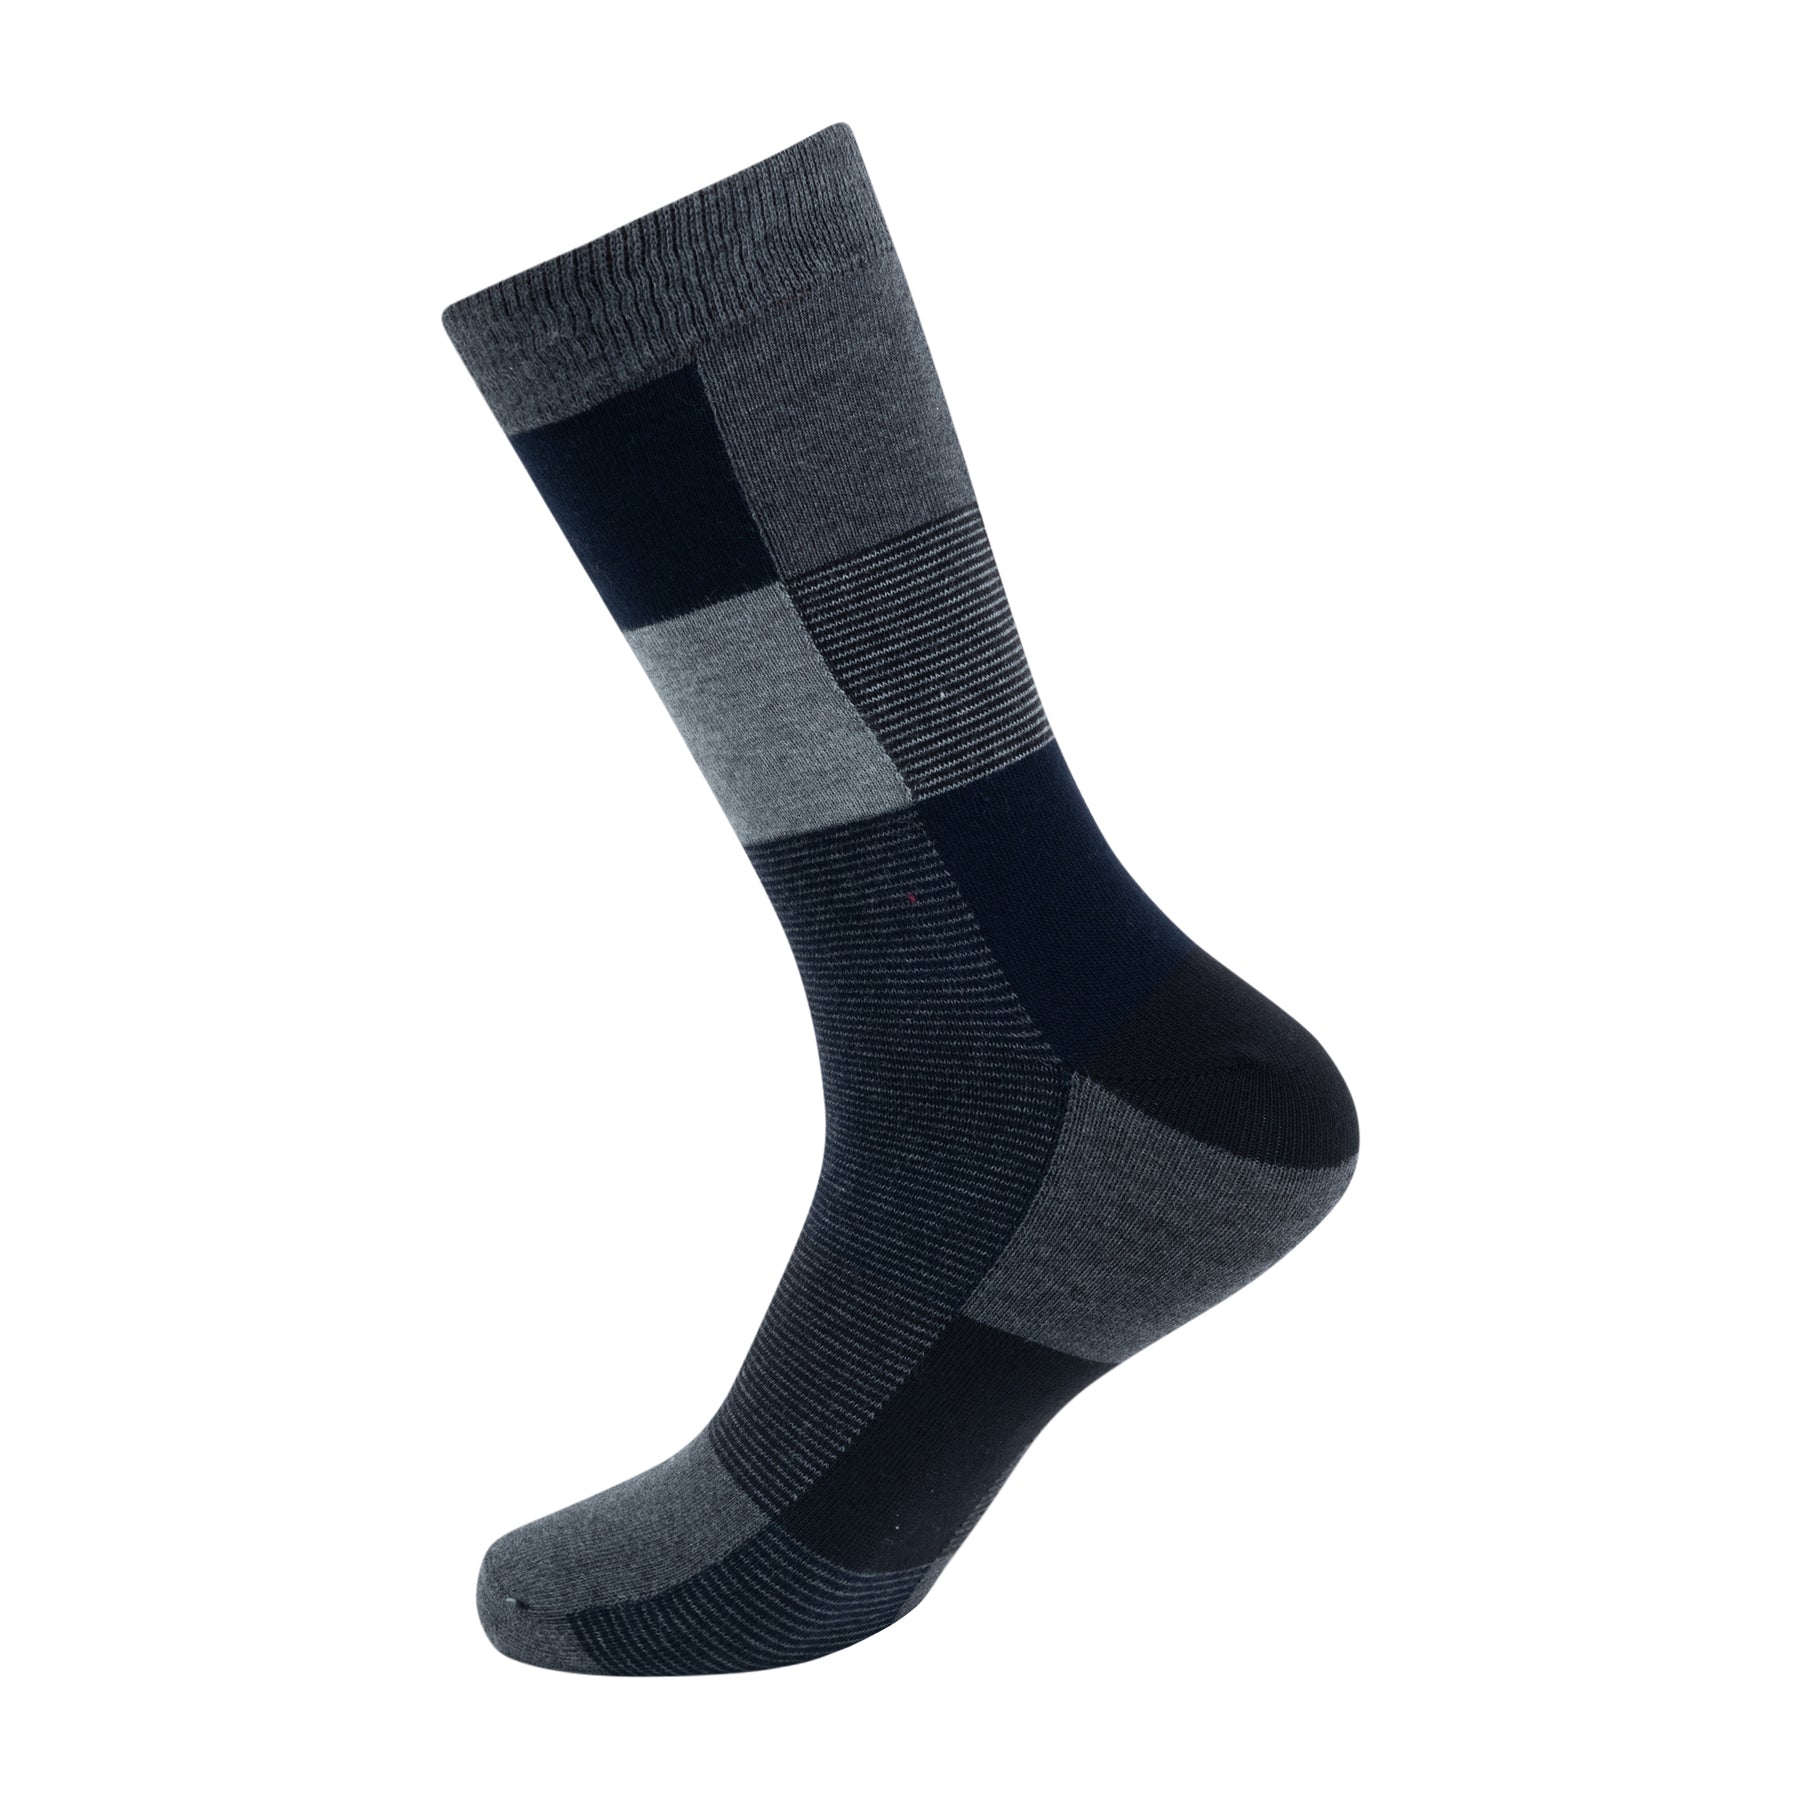 Mixed Square/Stripe Socks